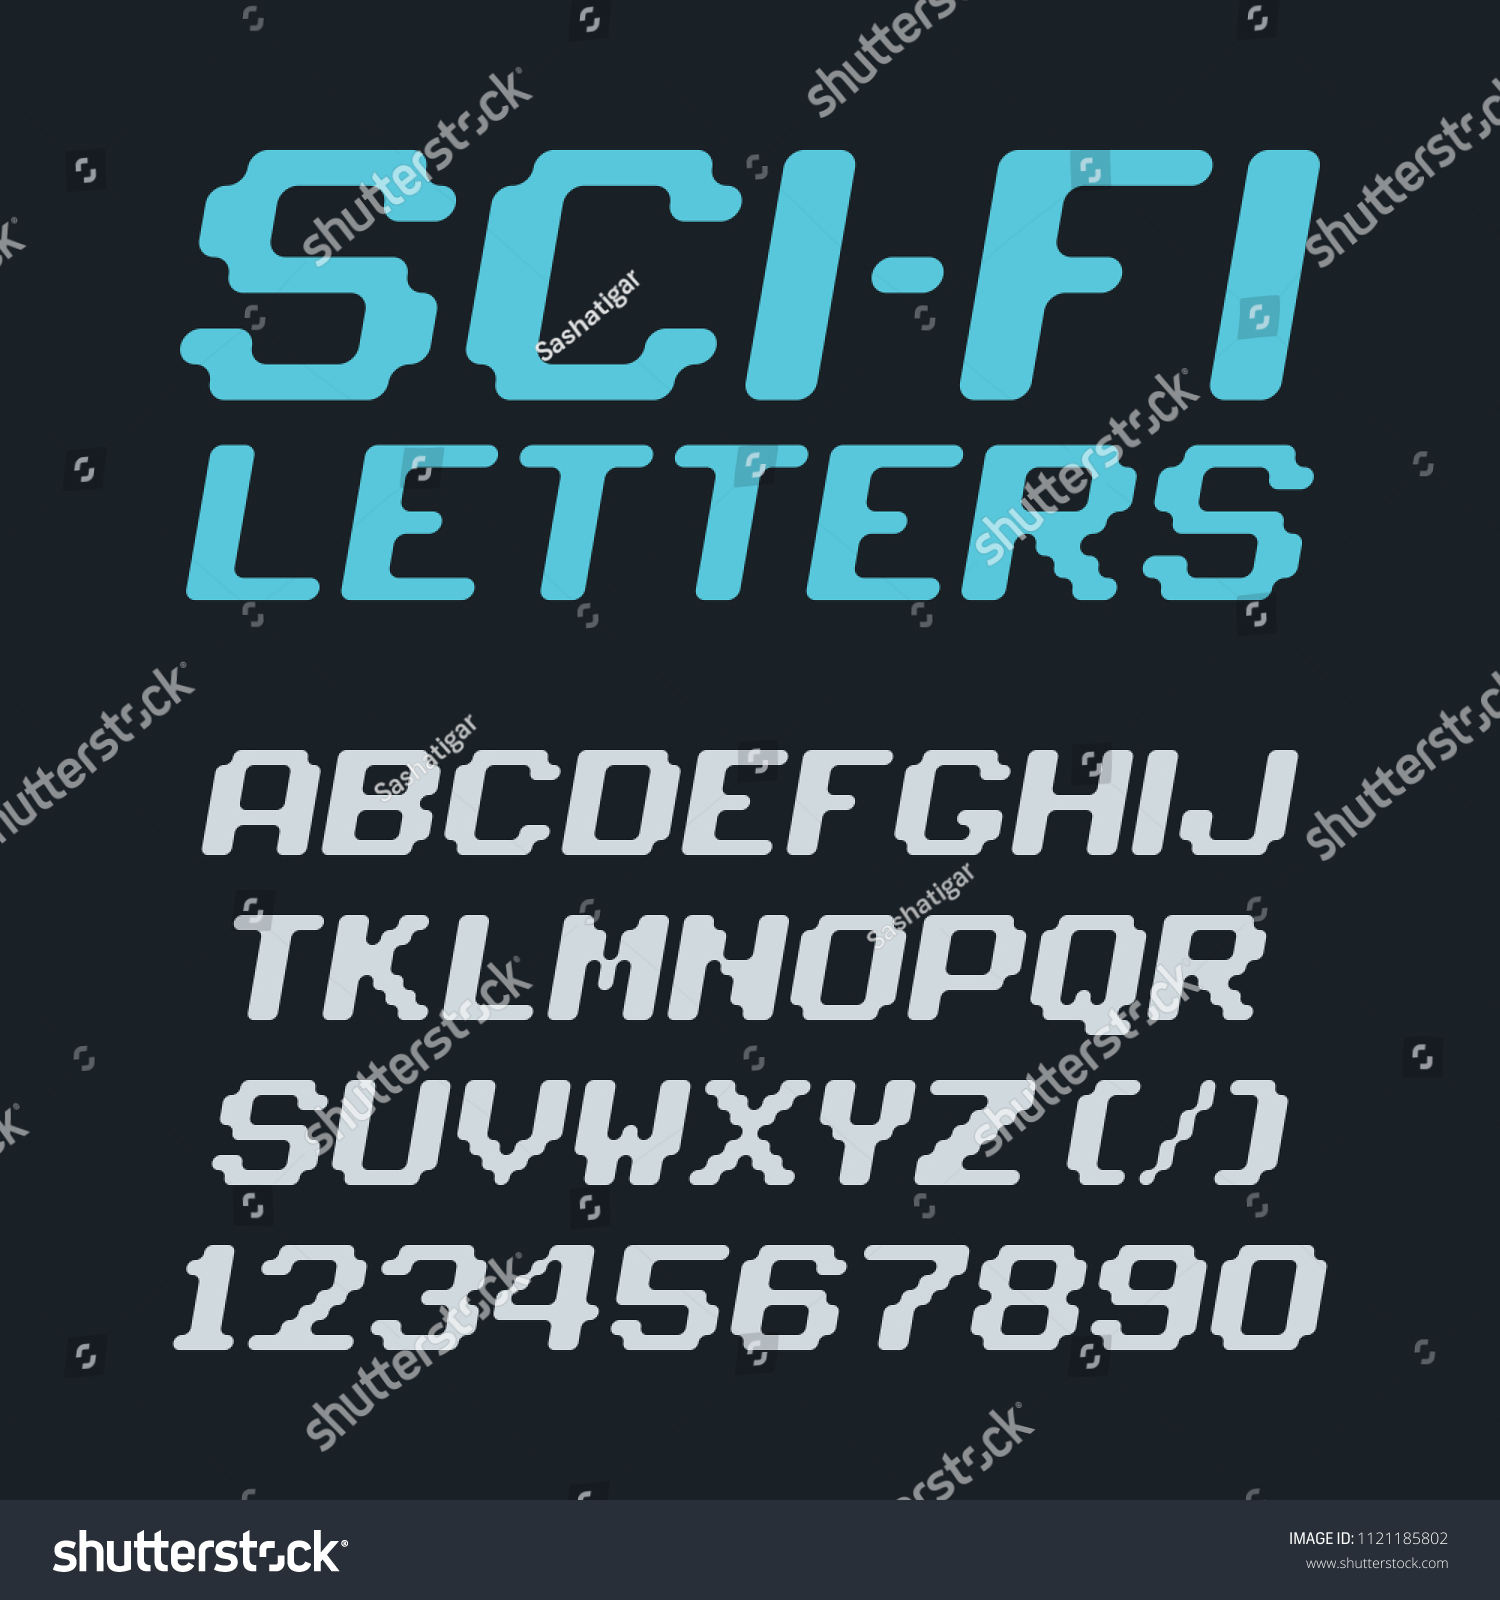 futuristic fonts alphabet